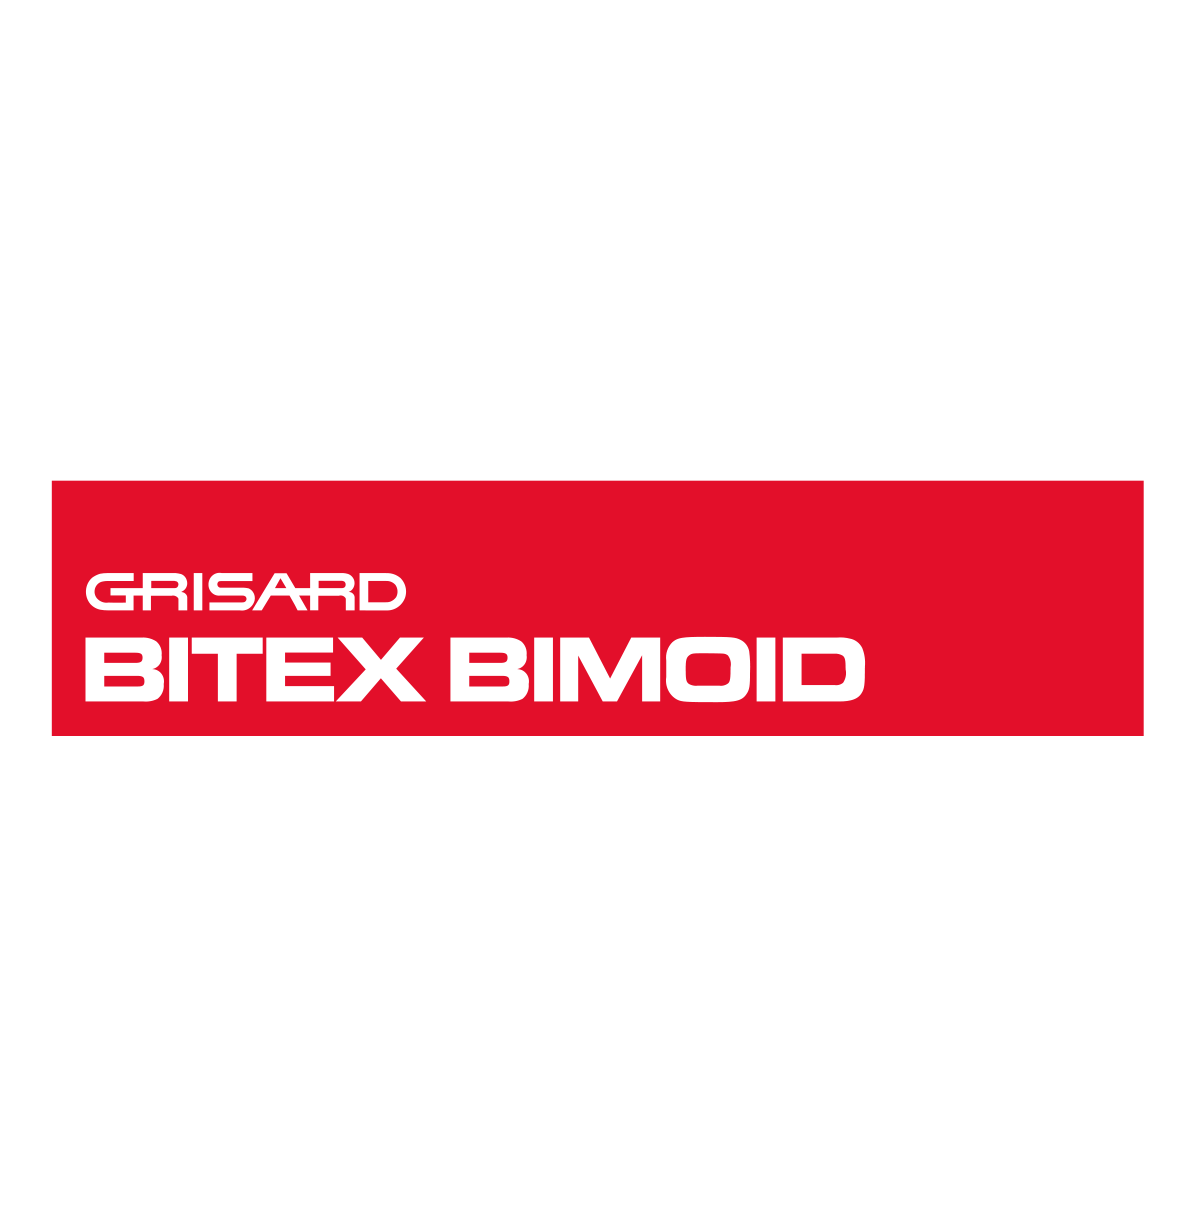 BITEX BIMOID AG